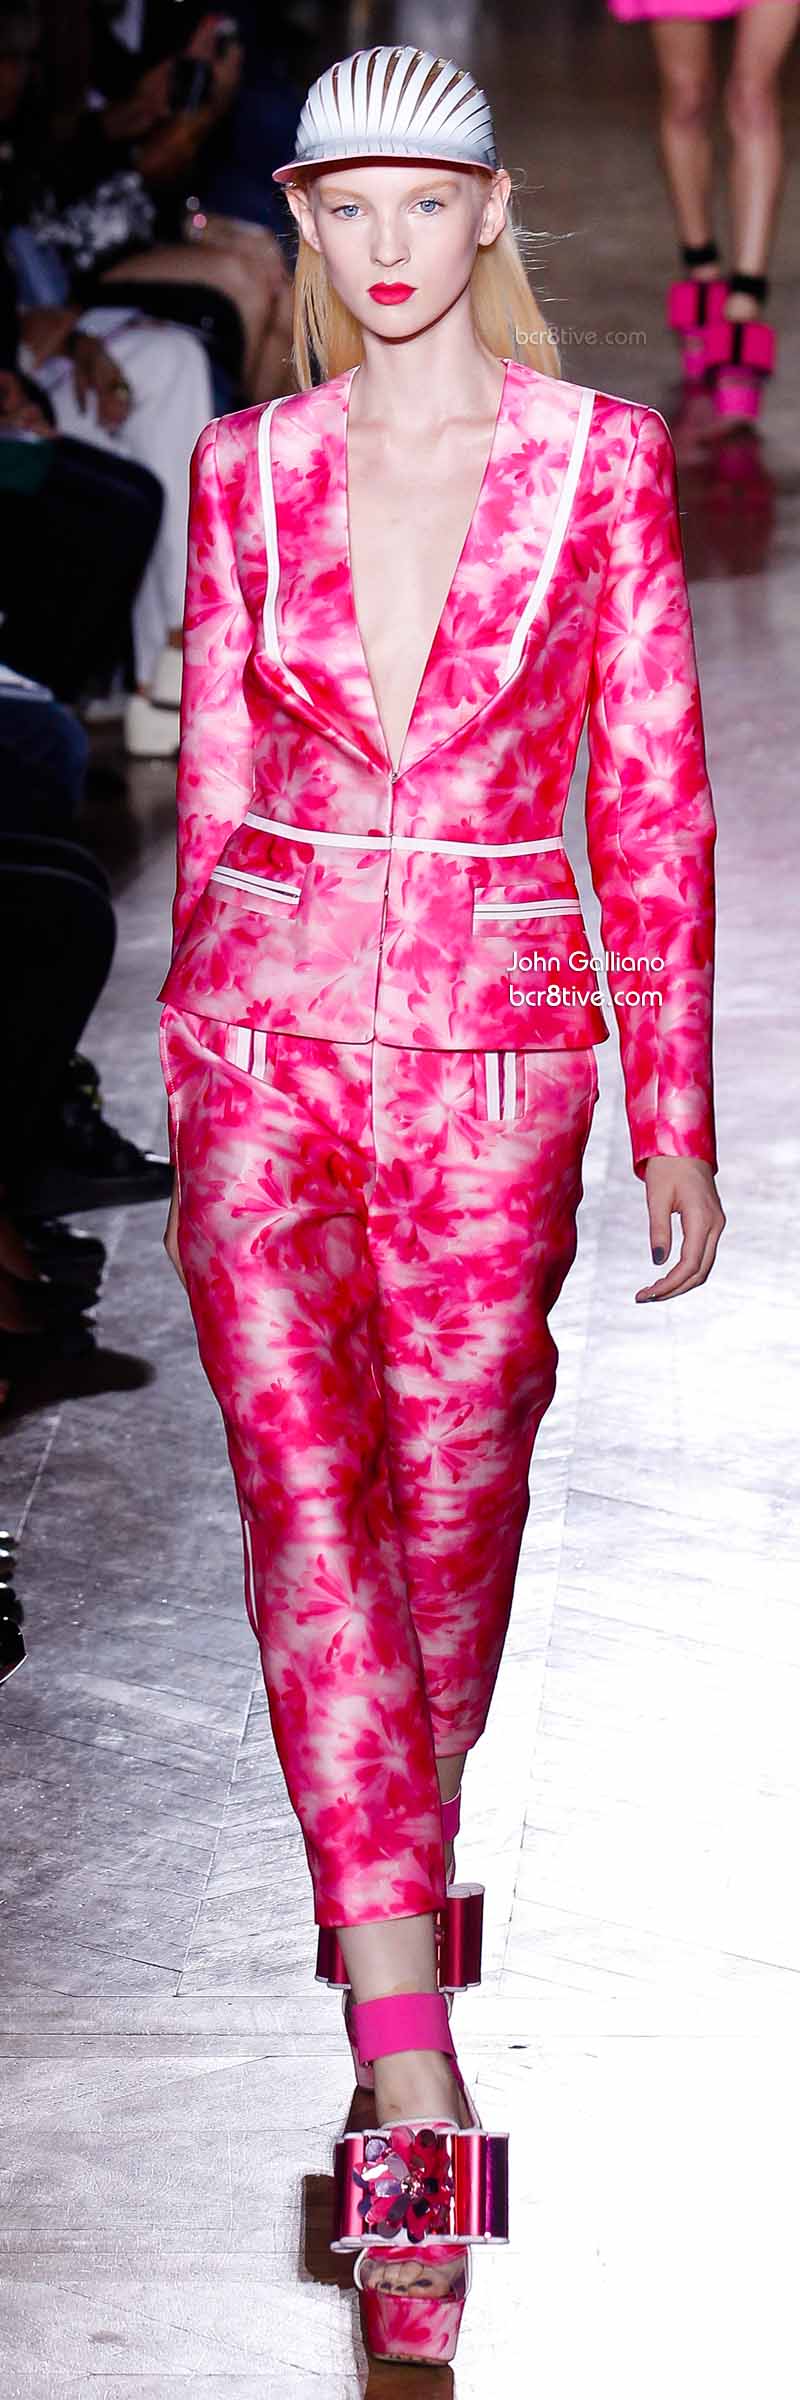 John Galliano - Hot Pink Menswear Inspired Suit